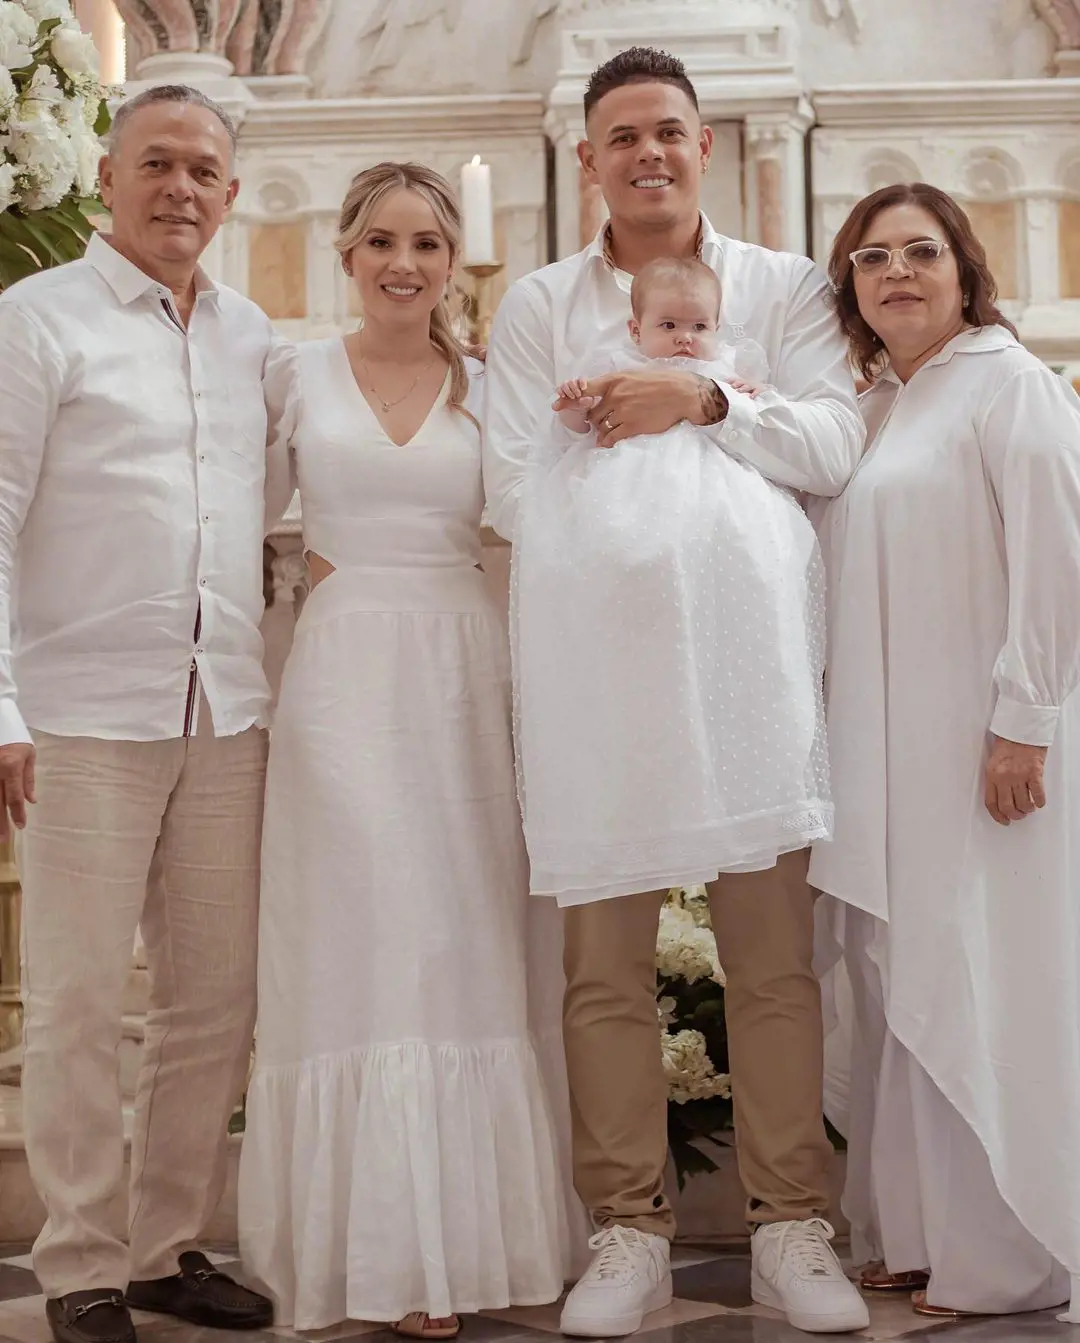 Alvaro and Uldy Urshela attending their granddaughter's baptism